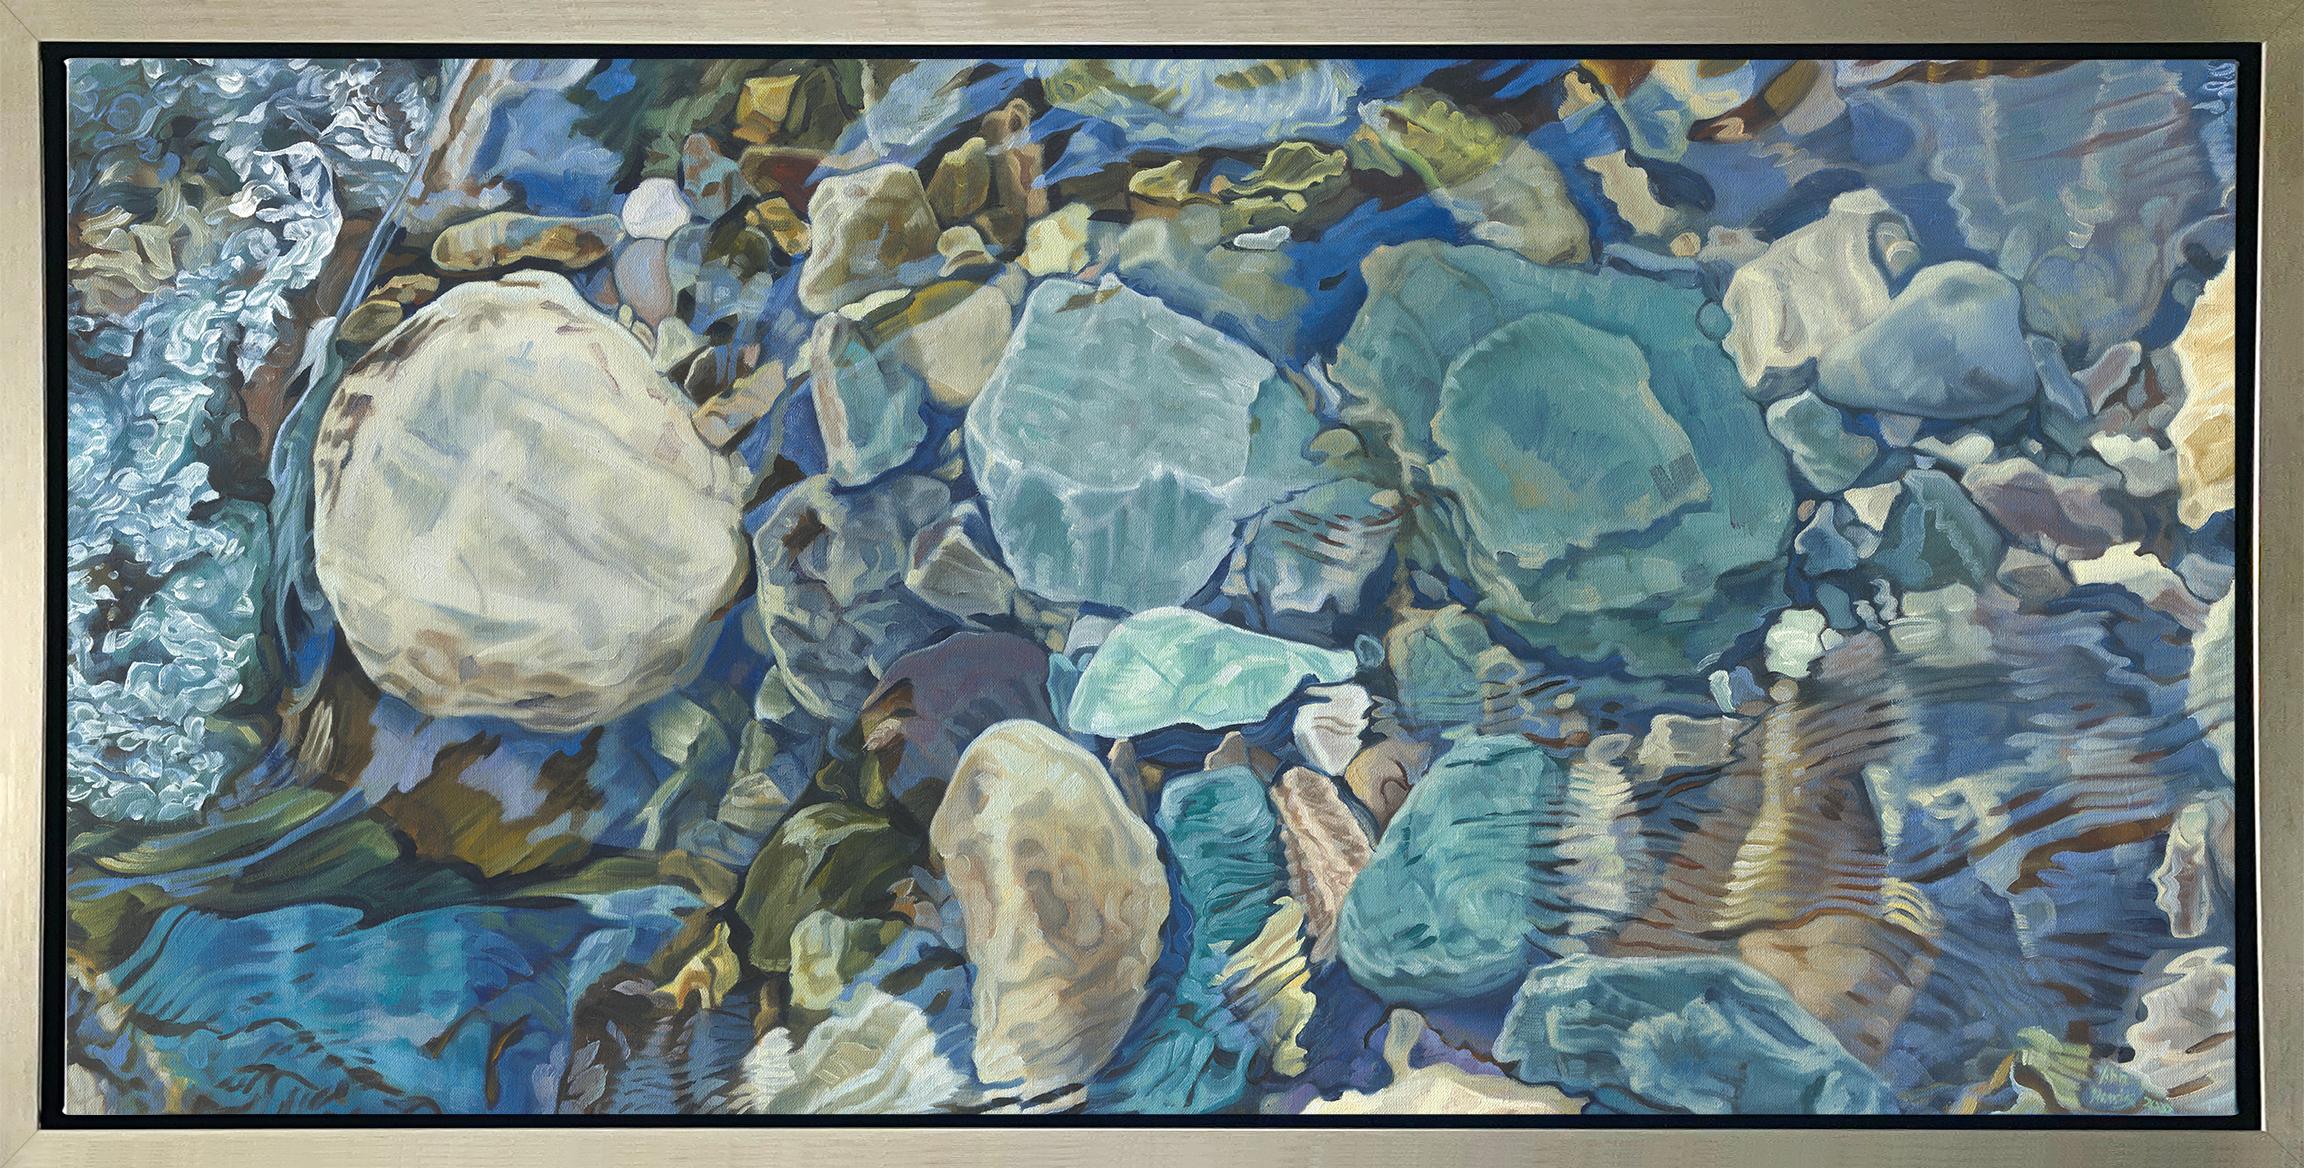 John Harris (painter) Landscape Print - "Rocky River 8, " Framed Limited Edition Giclee Print, 24" x 48"